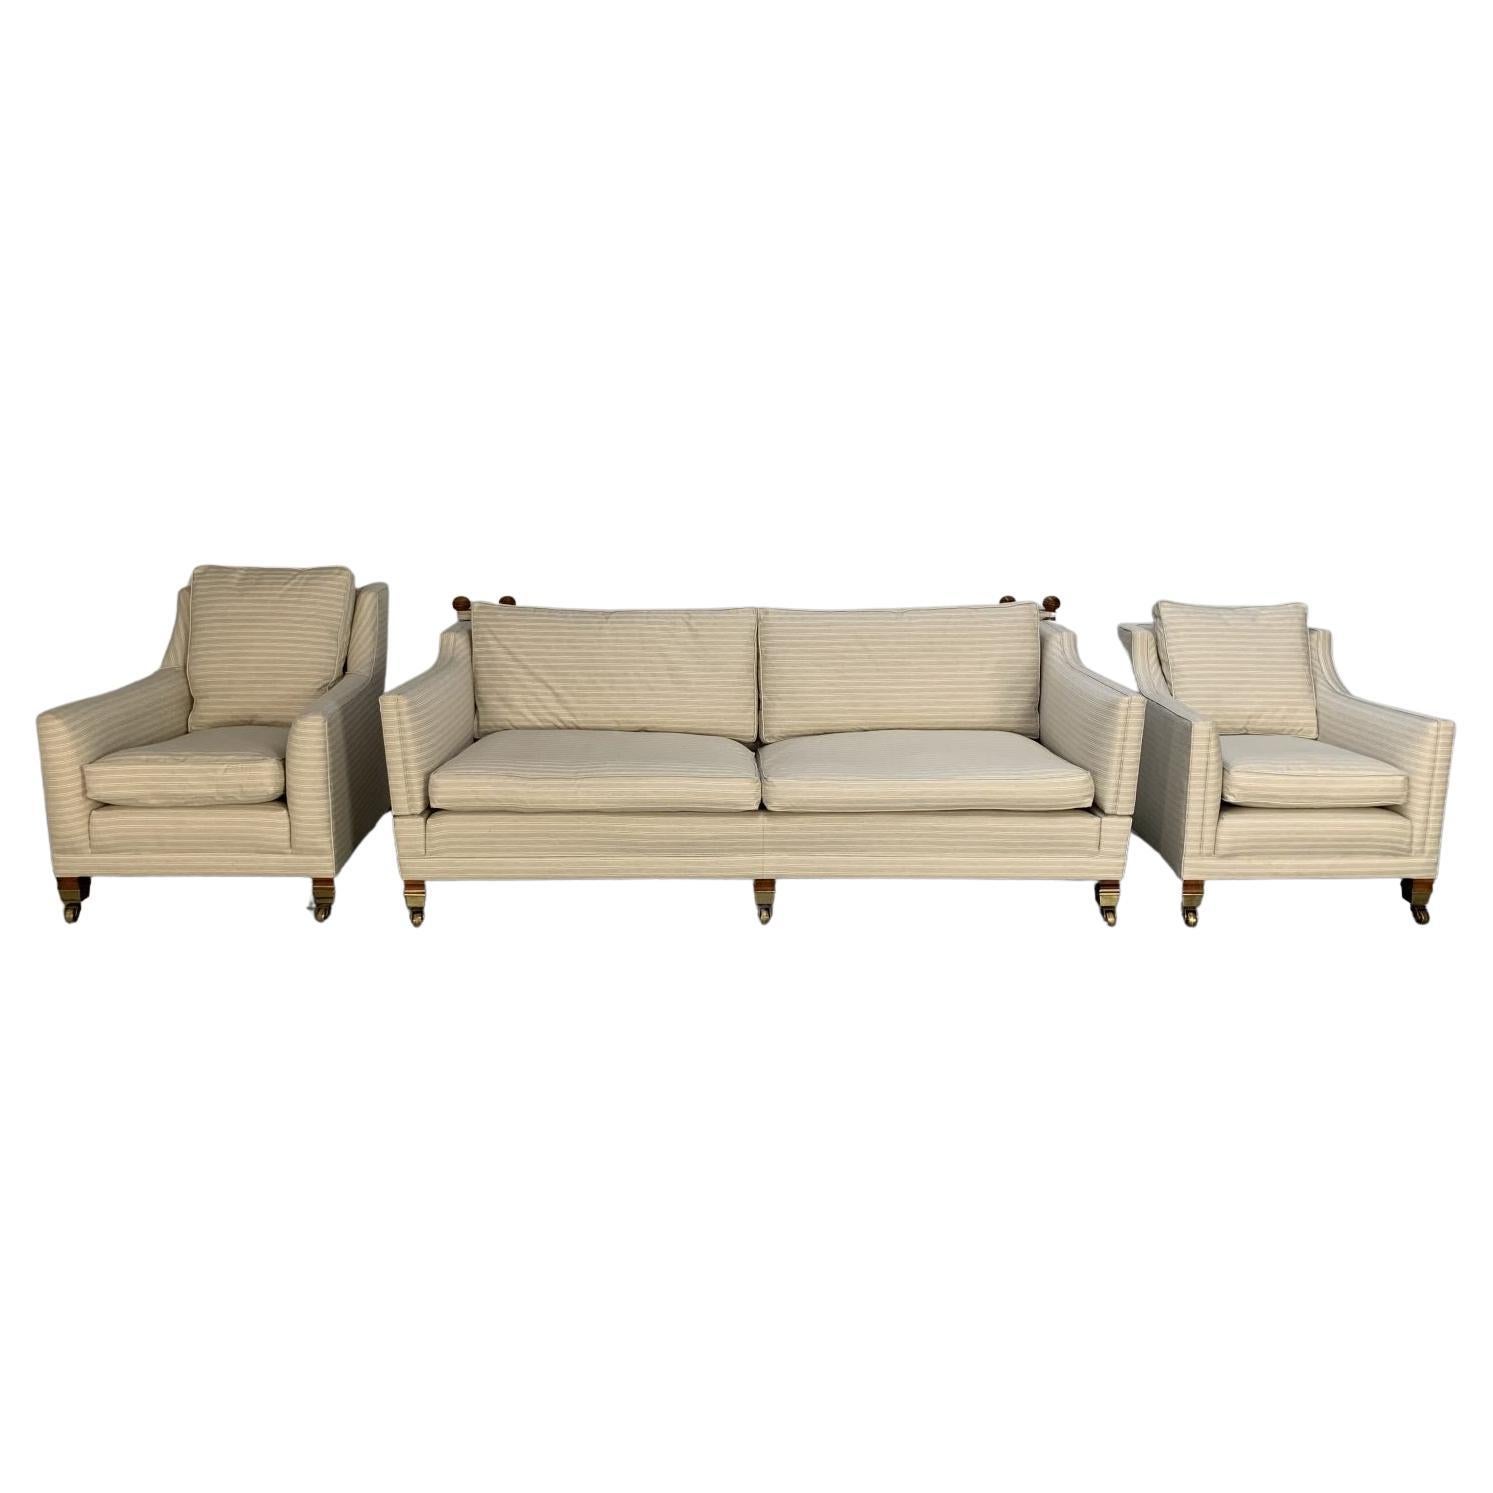 Duresta “Trafalgar” Sofa & 2 Armchair Suite – In Navy Pinstripe Linen For Sale